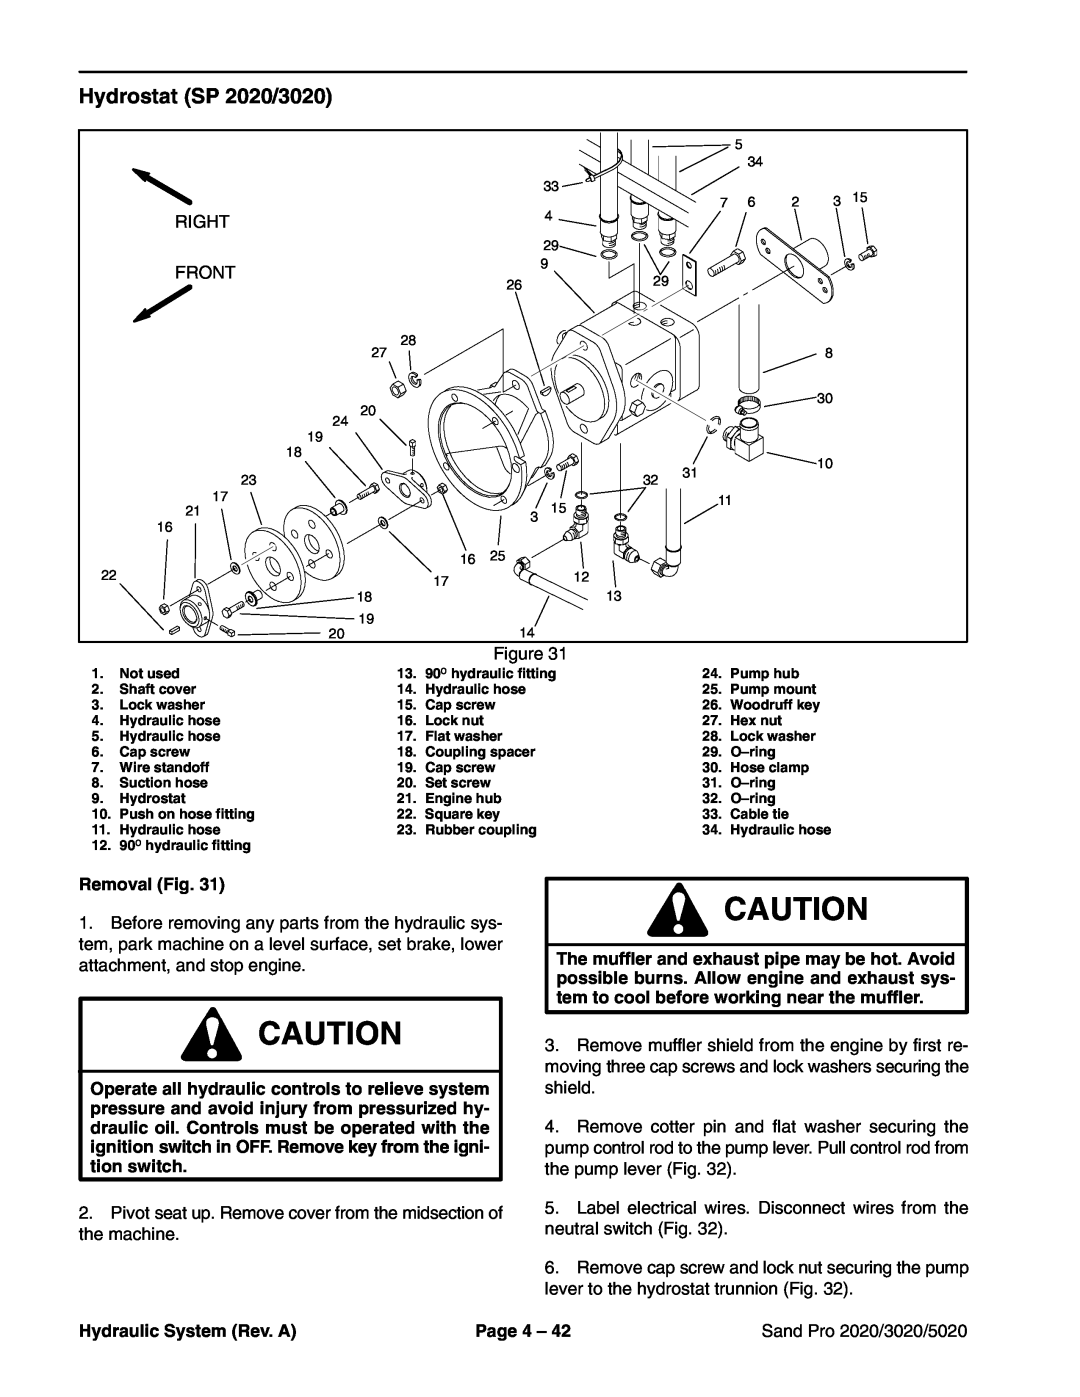 Toro service manual Hydrostat SP 2020/3020, Removal Fig, Hydraulic System Rev. A, Page 4, Sand Pro 2020/3020/5020 